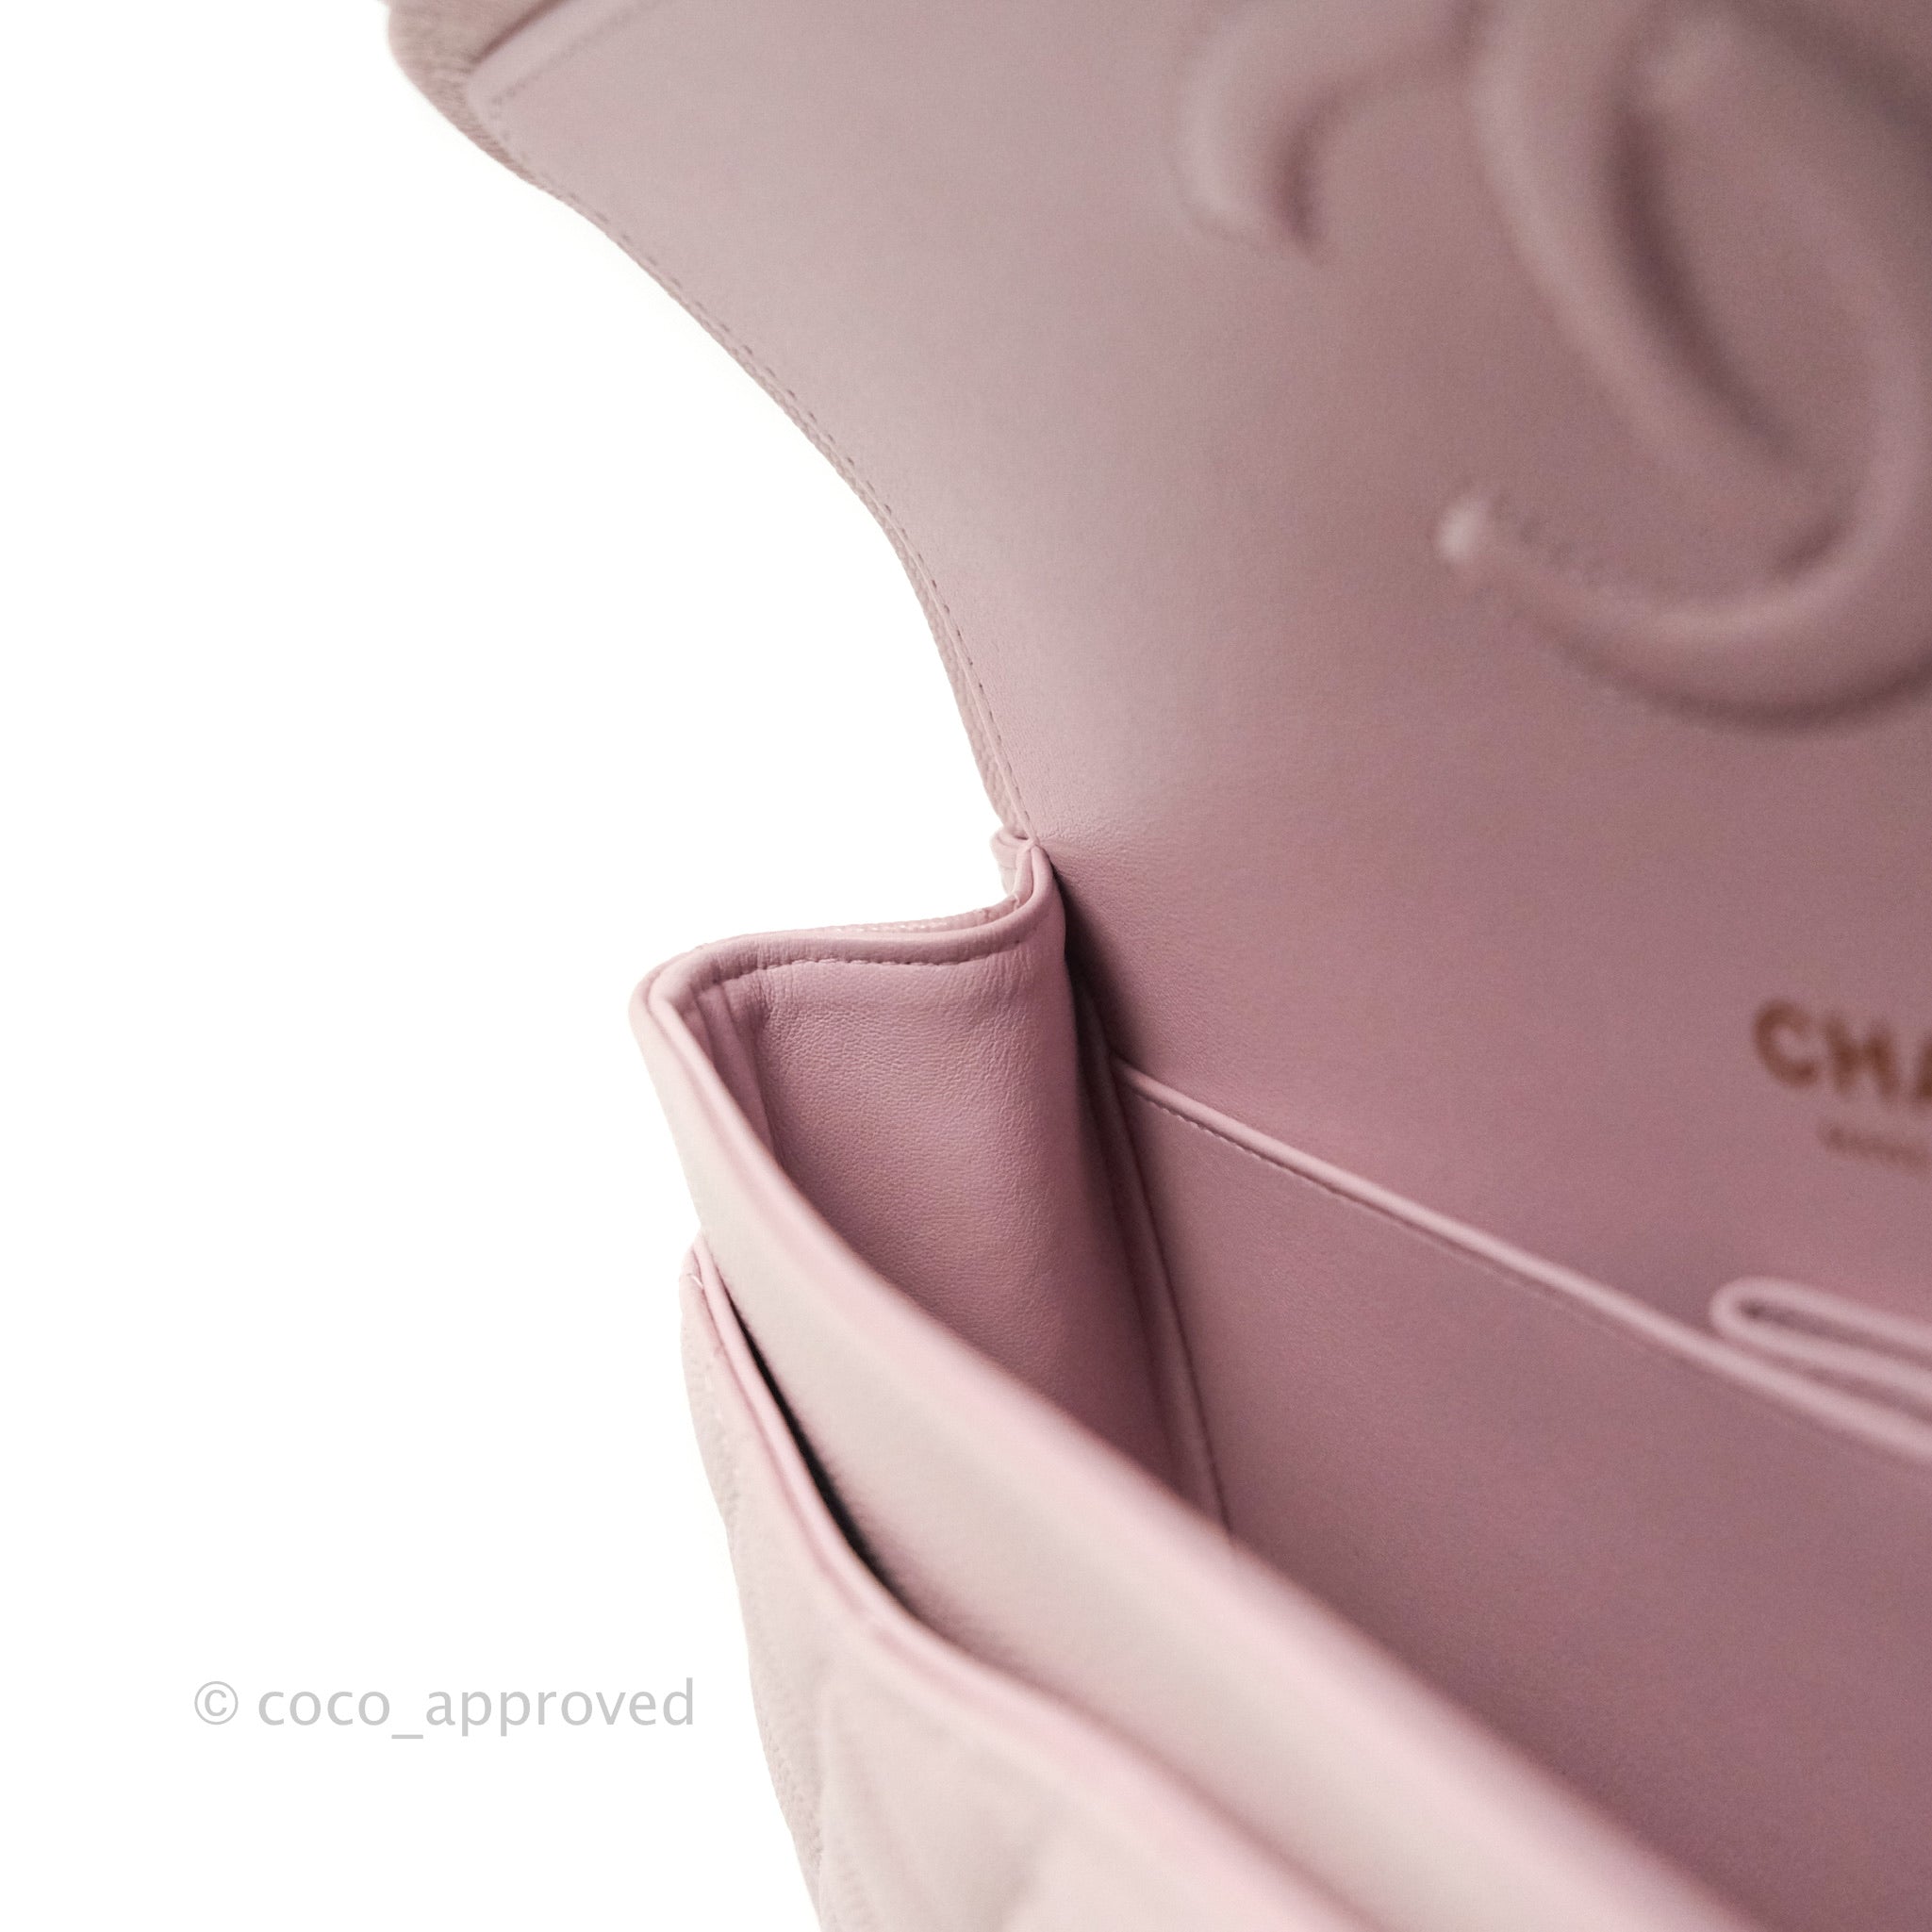 Chanel M/L Medium Double Flap Bag Lilac Rose Clair Caviar Gold